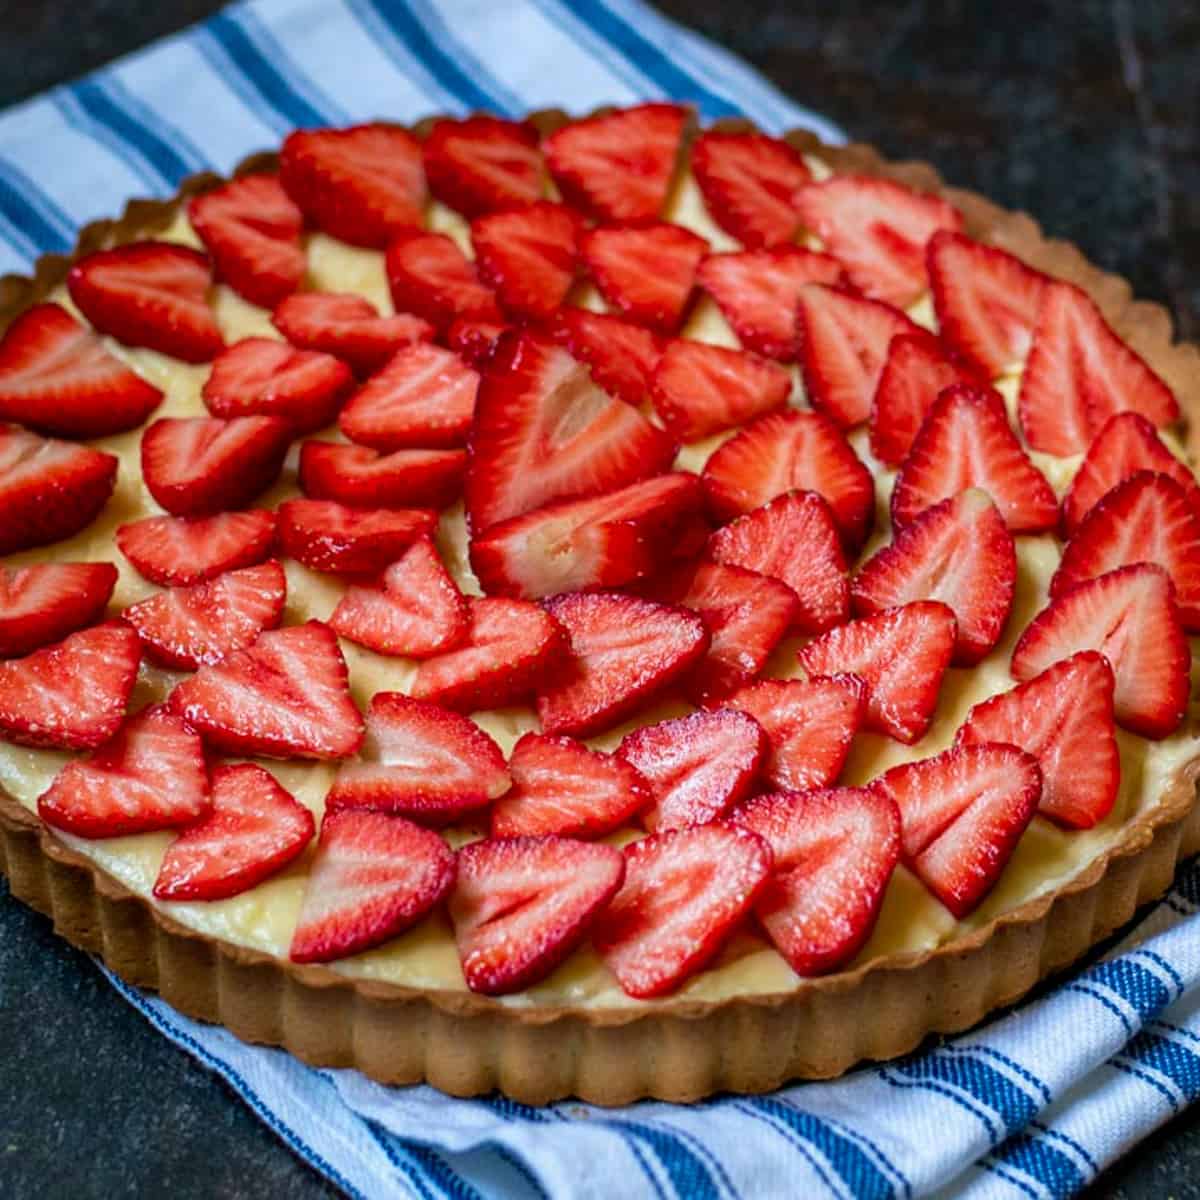 French strawberry tart